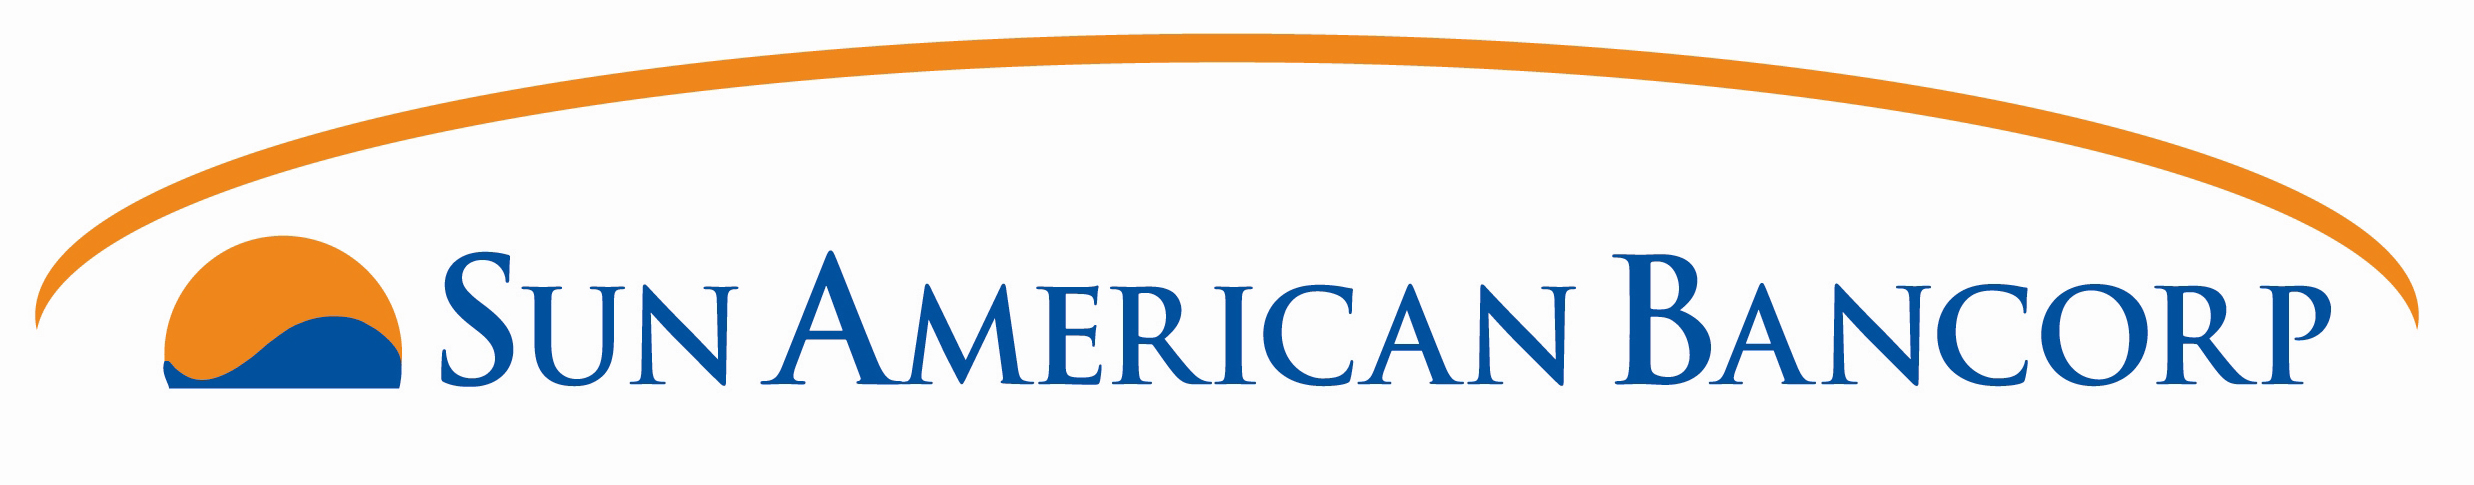 Sun American Bancorp Logo